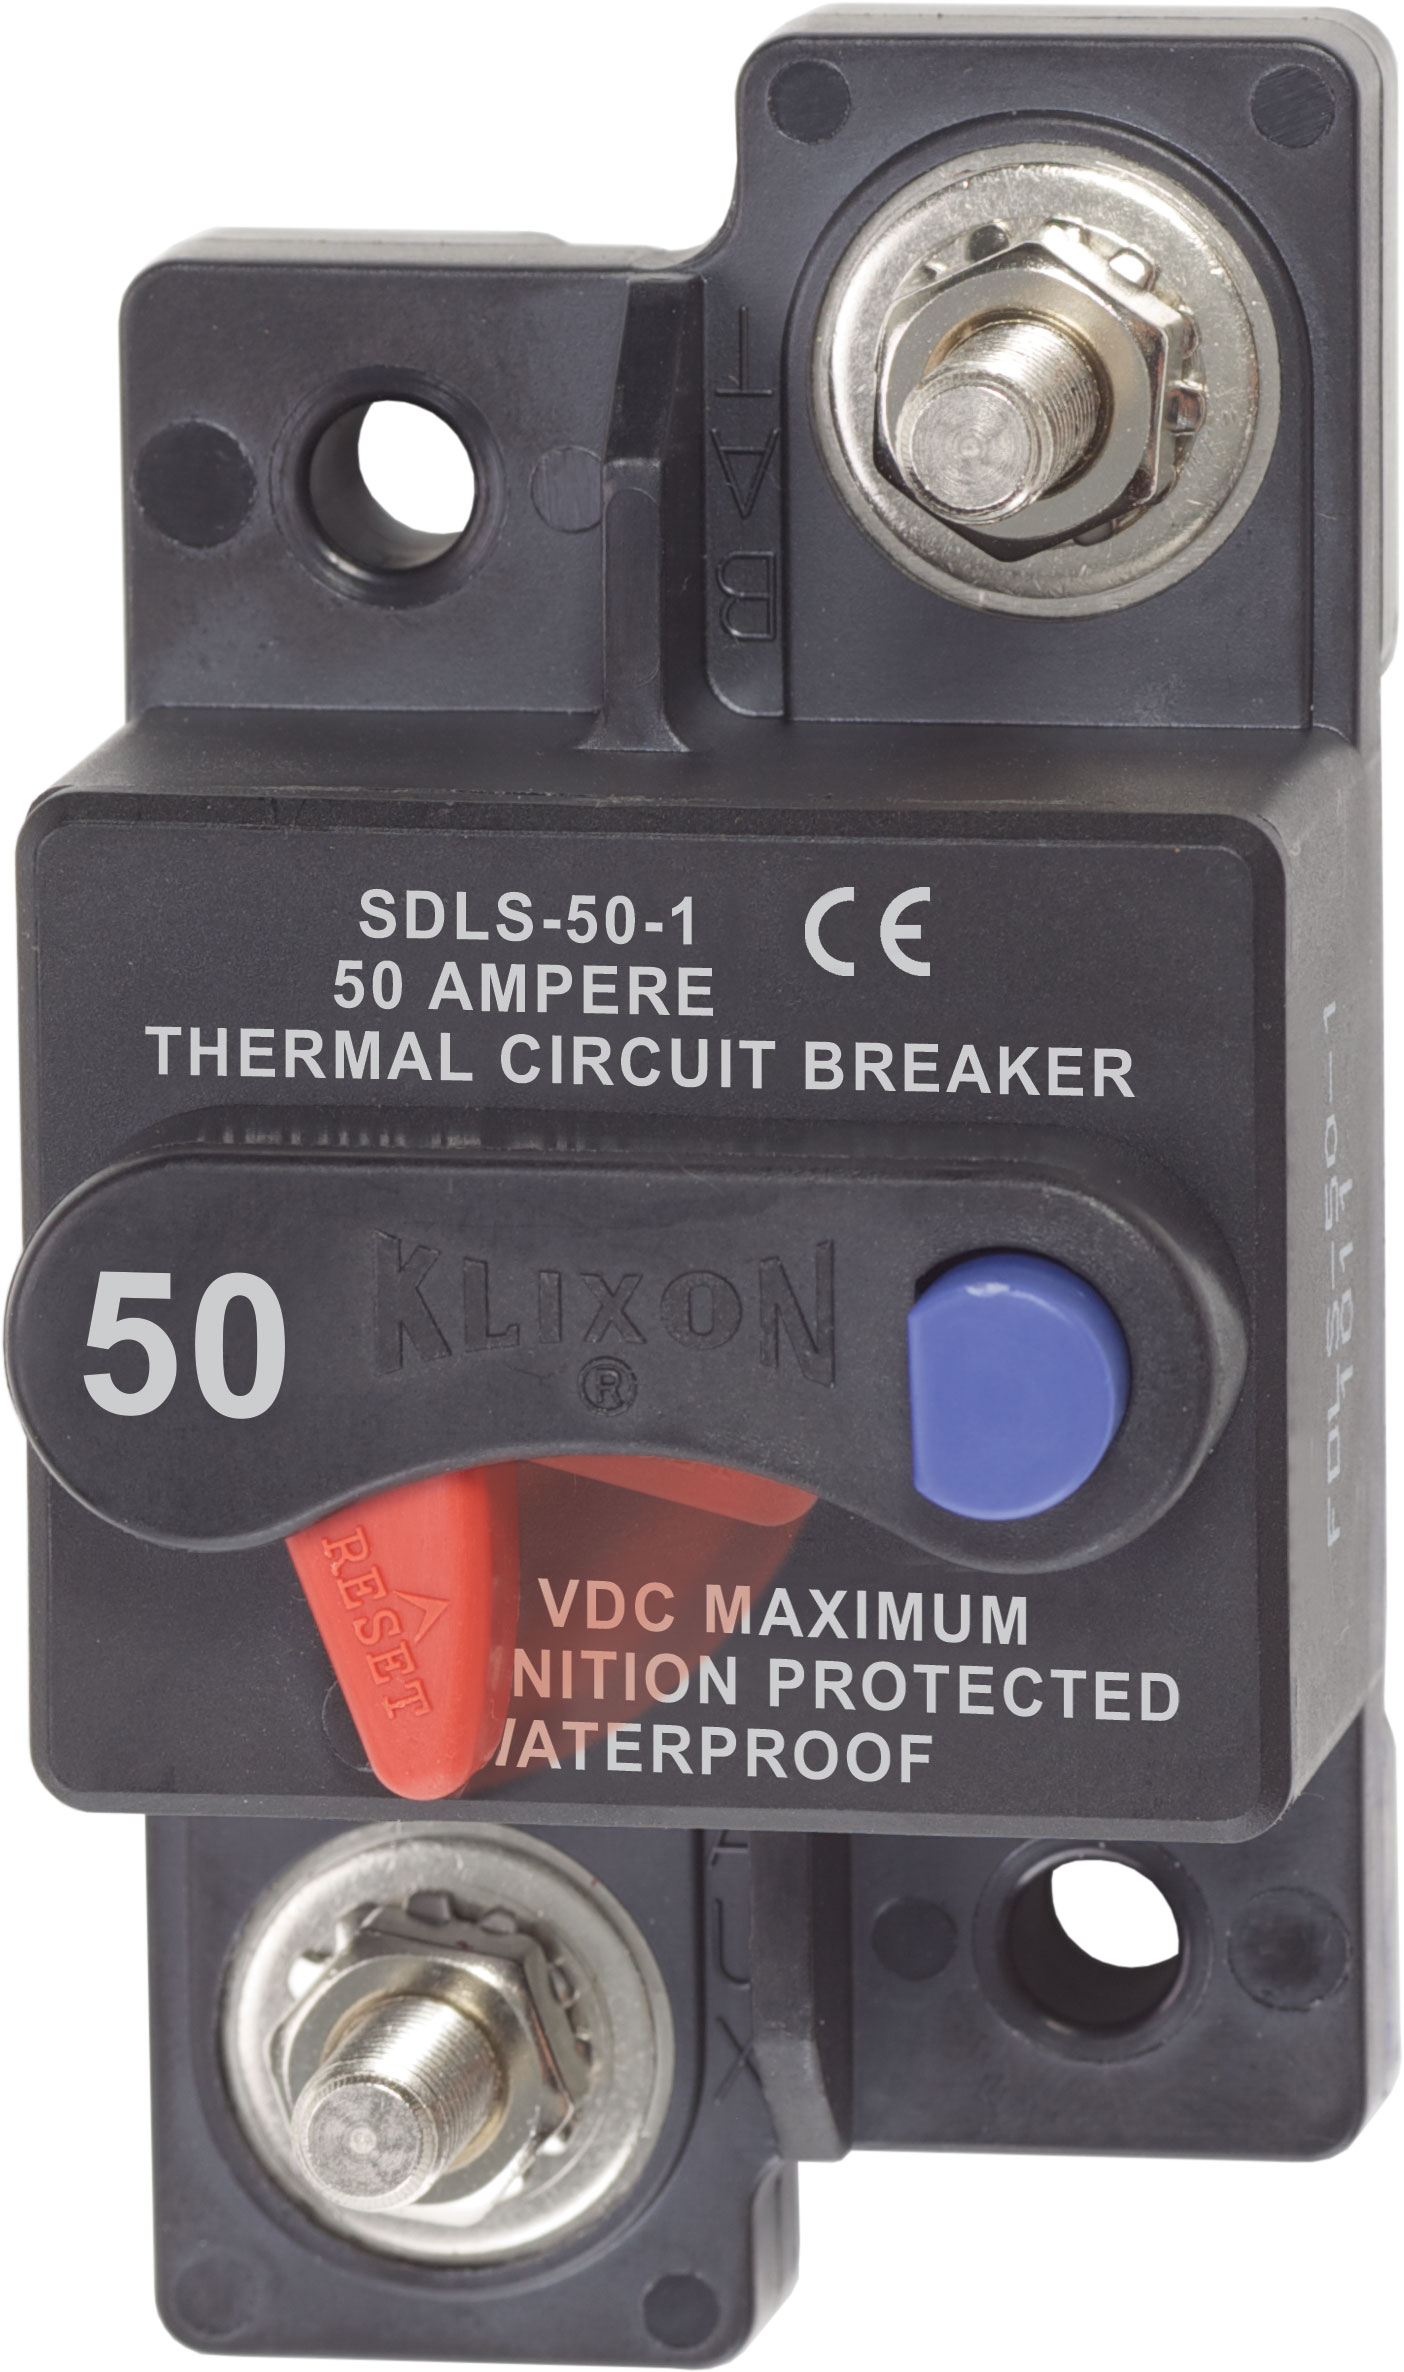 Part# 7173  Manufacturer Blue Sea Systems  Part Type Circuit Breaker